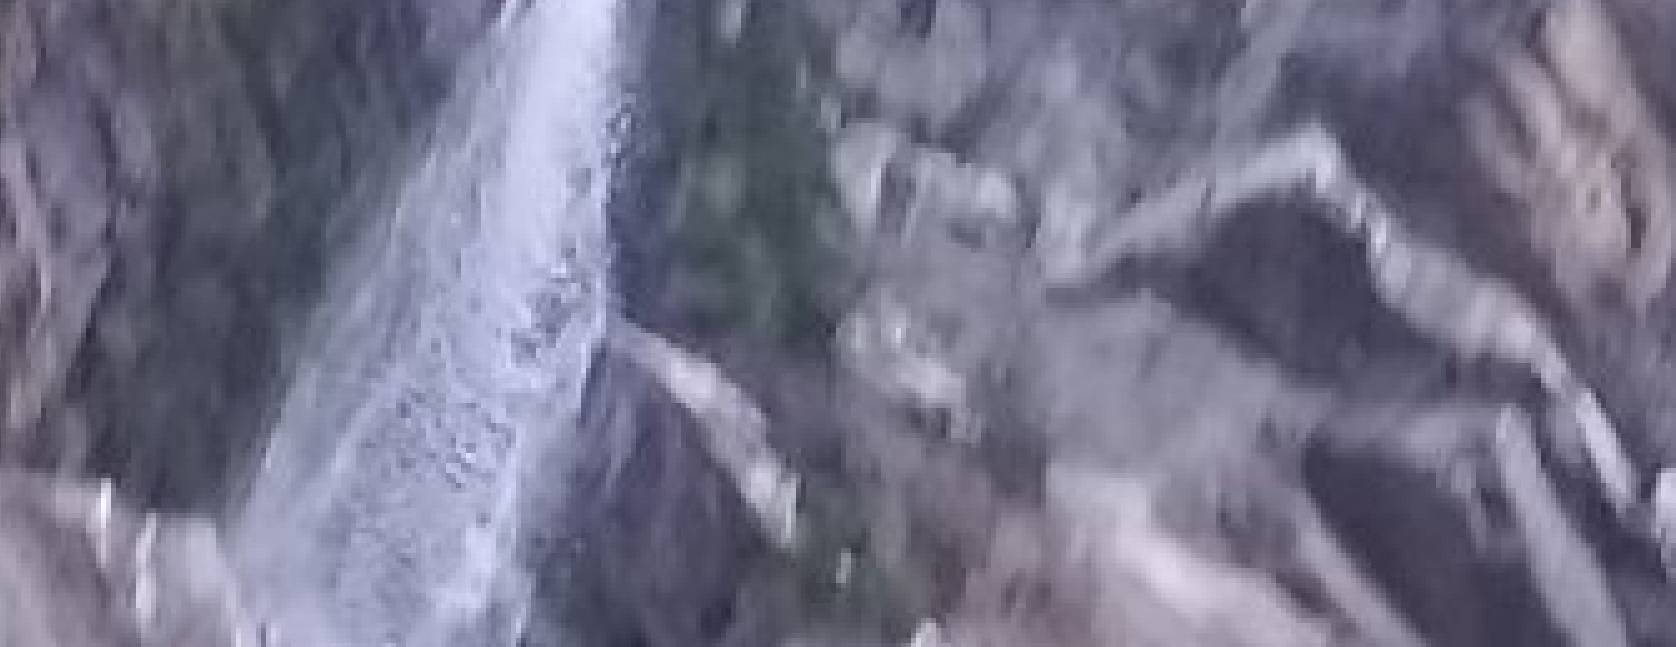 Bhatta Falls in Mussoorie